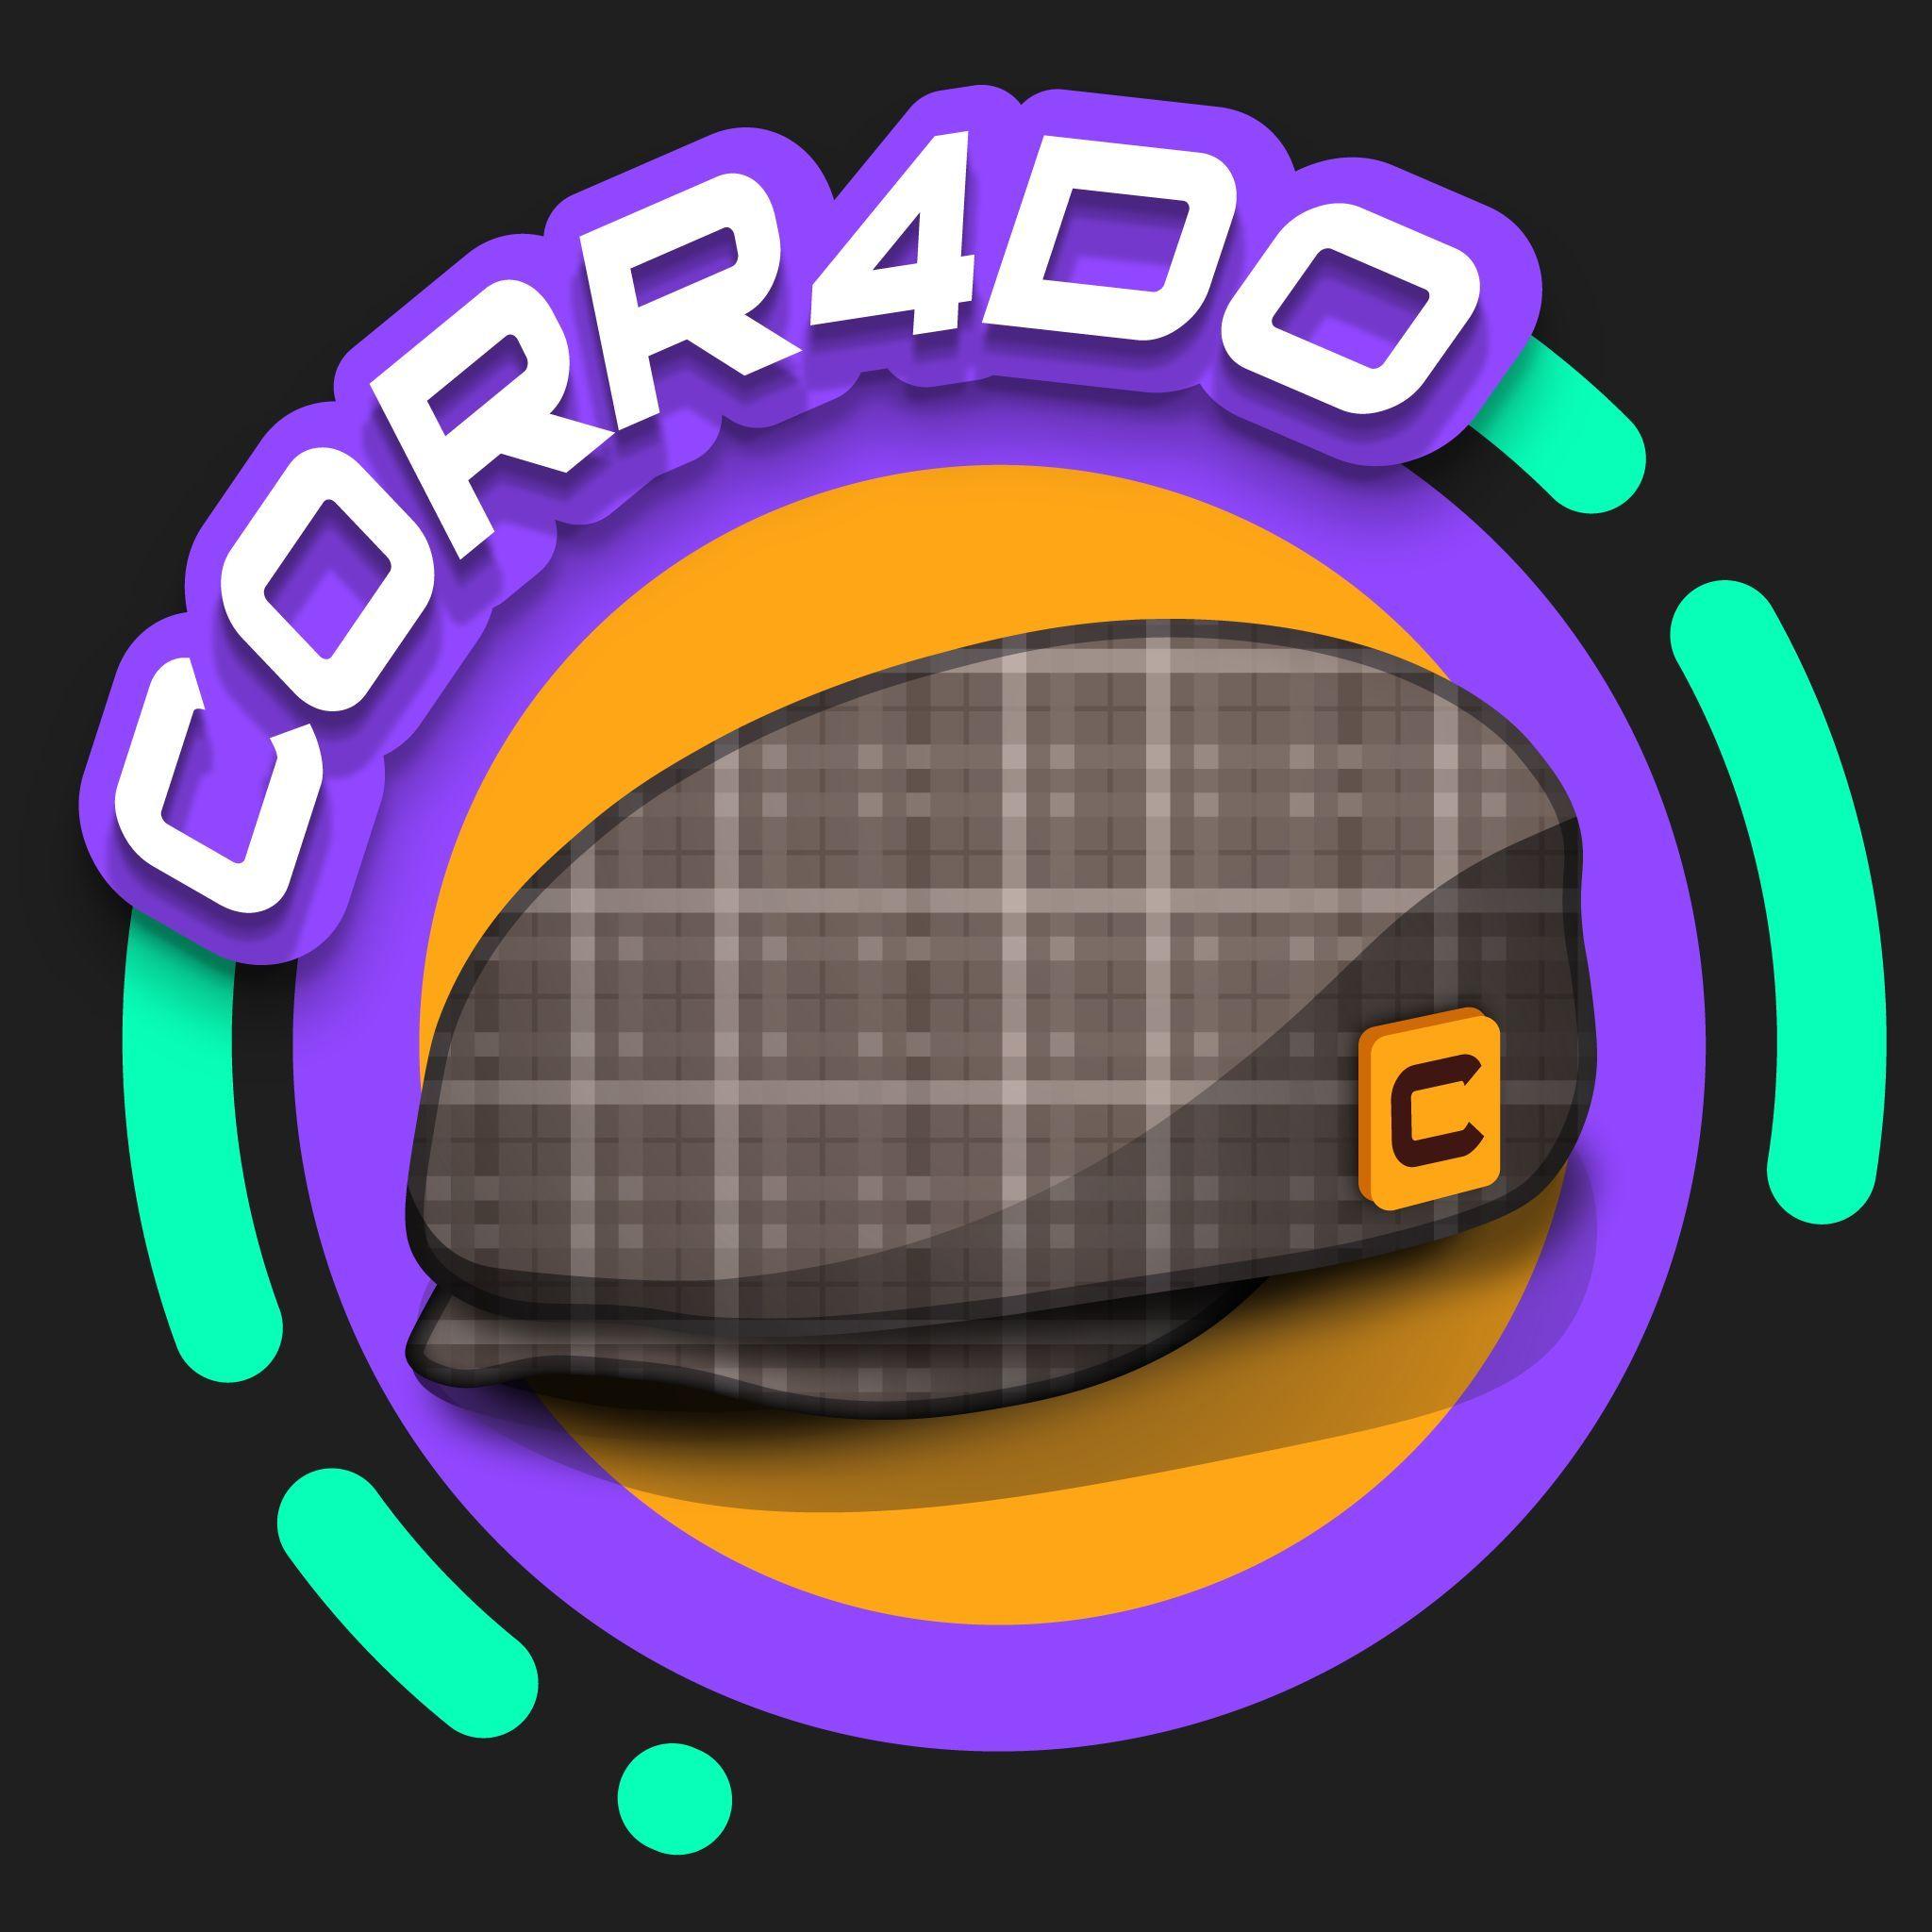 Player Corr4do avatar